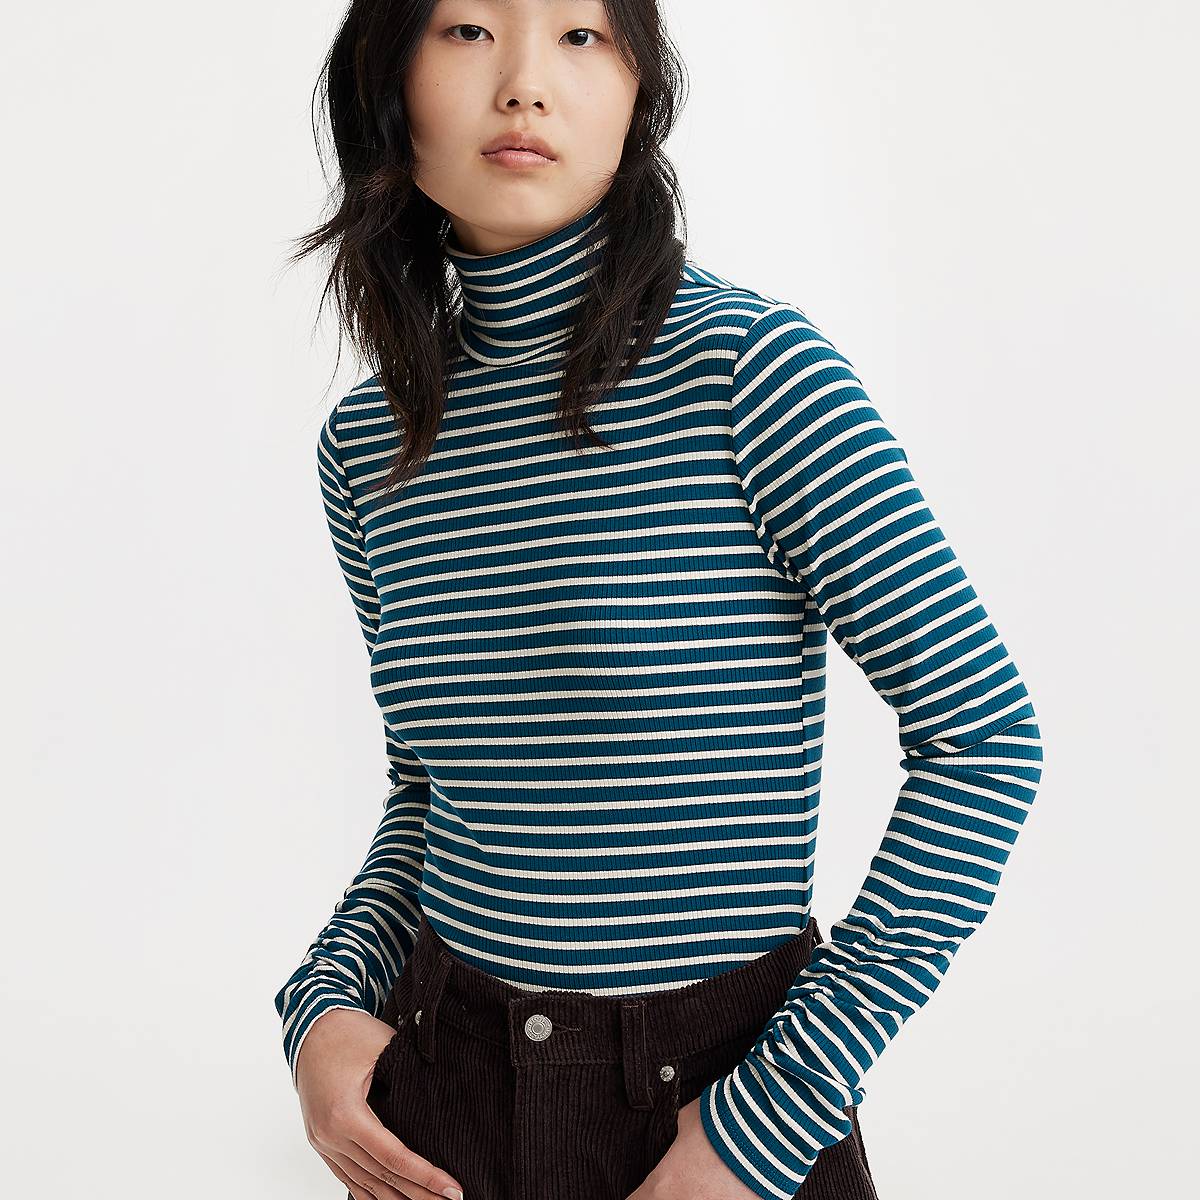 Woman wearing striped shirt